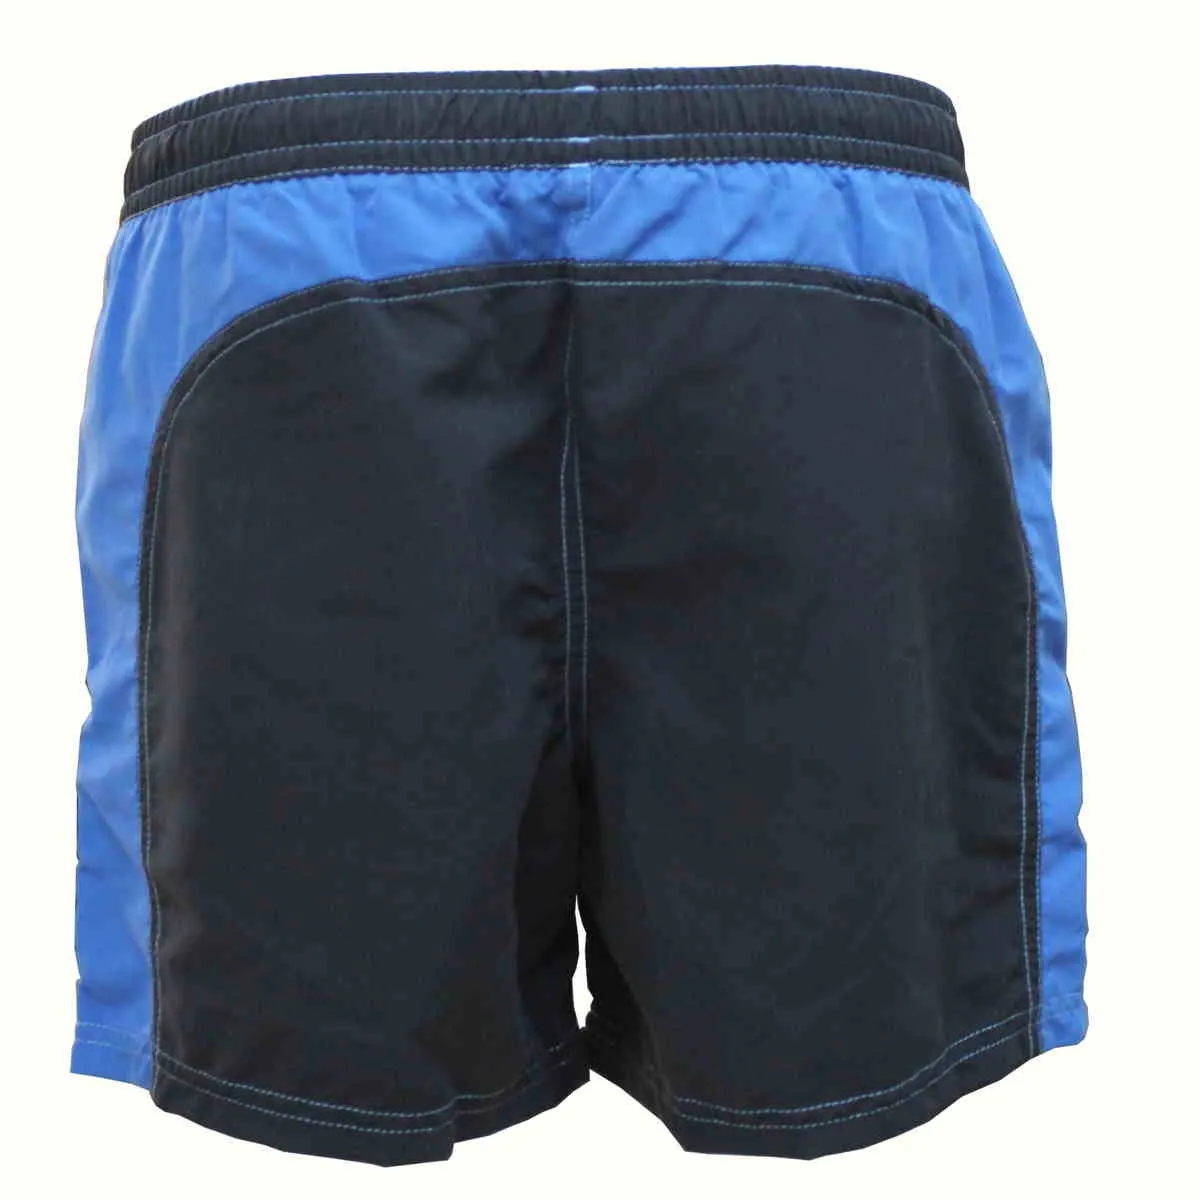 Swimming trunks - Adrian swimming trunks graphite/blue